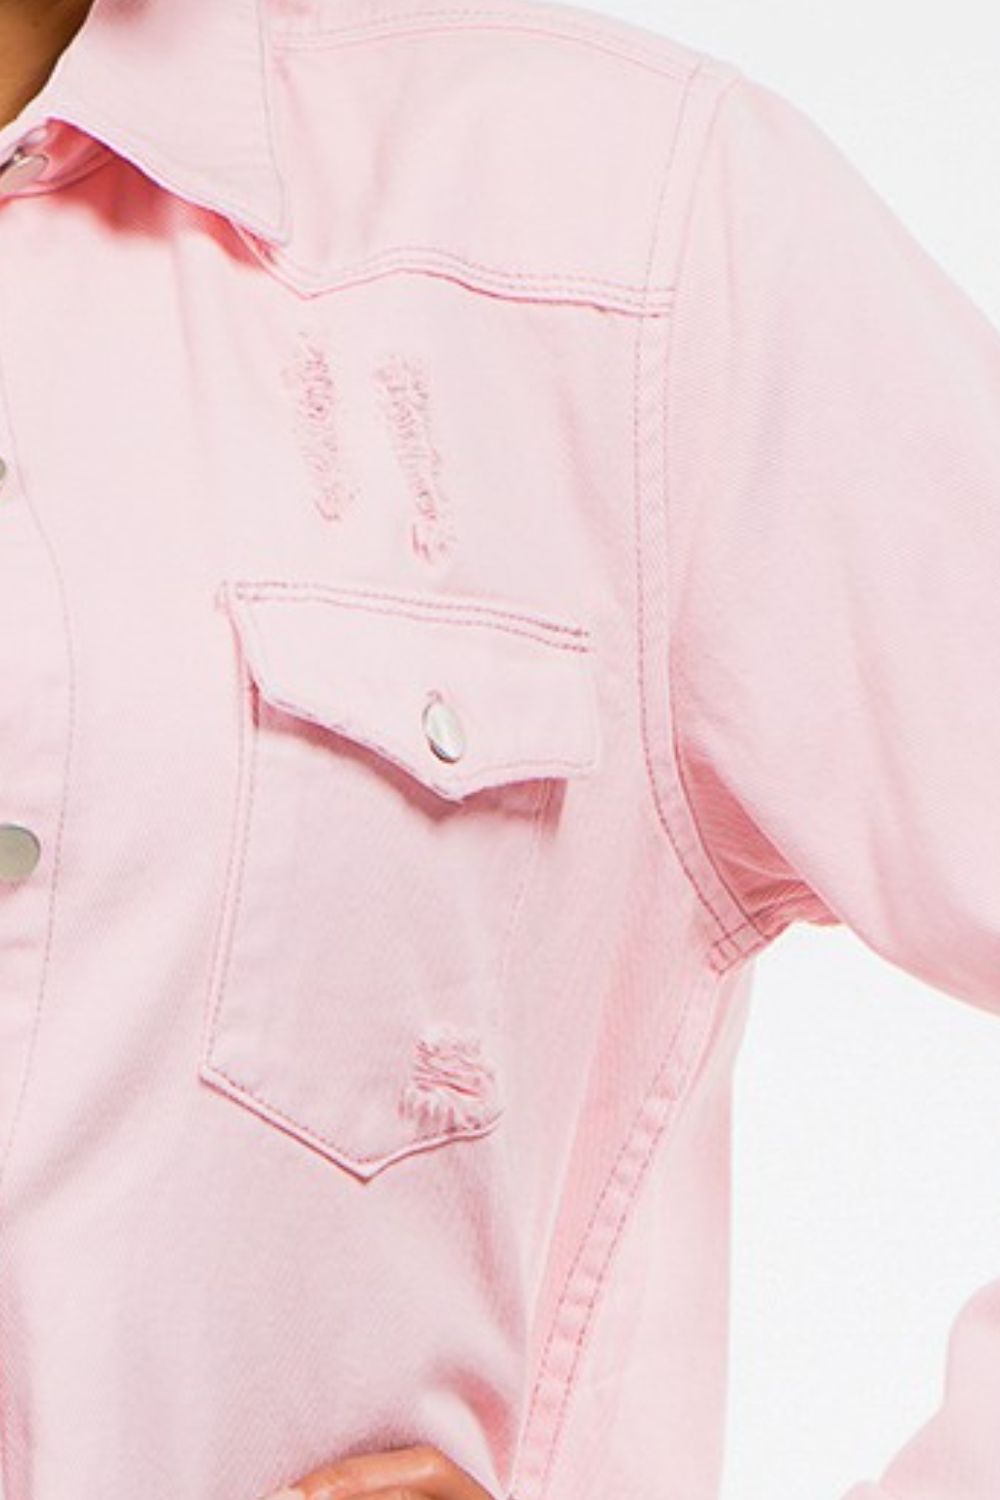 Frayed Hem Distressed Denim Jacket in PinkJacketAmerican Bazi